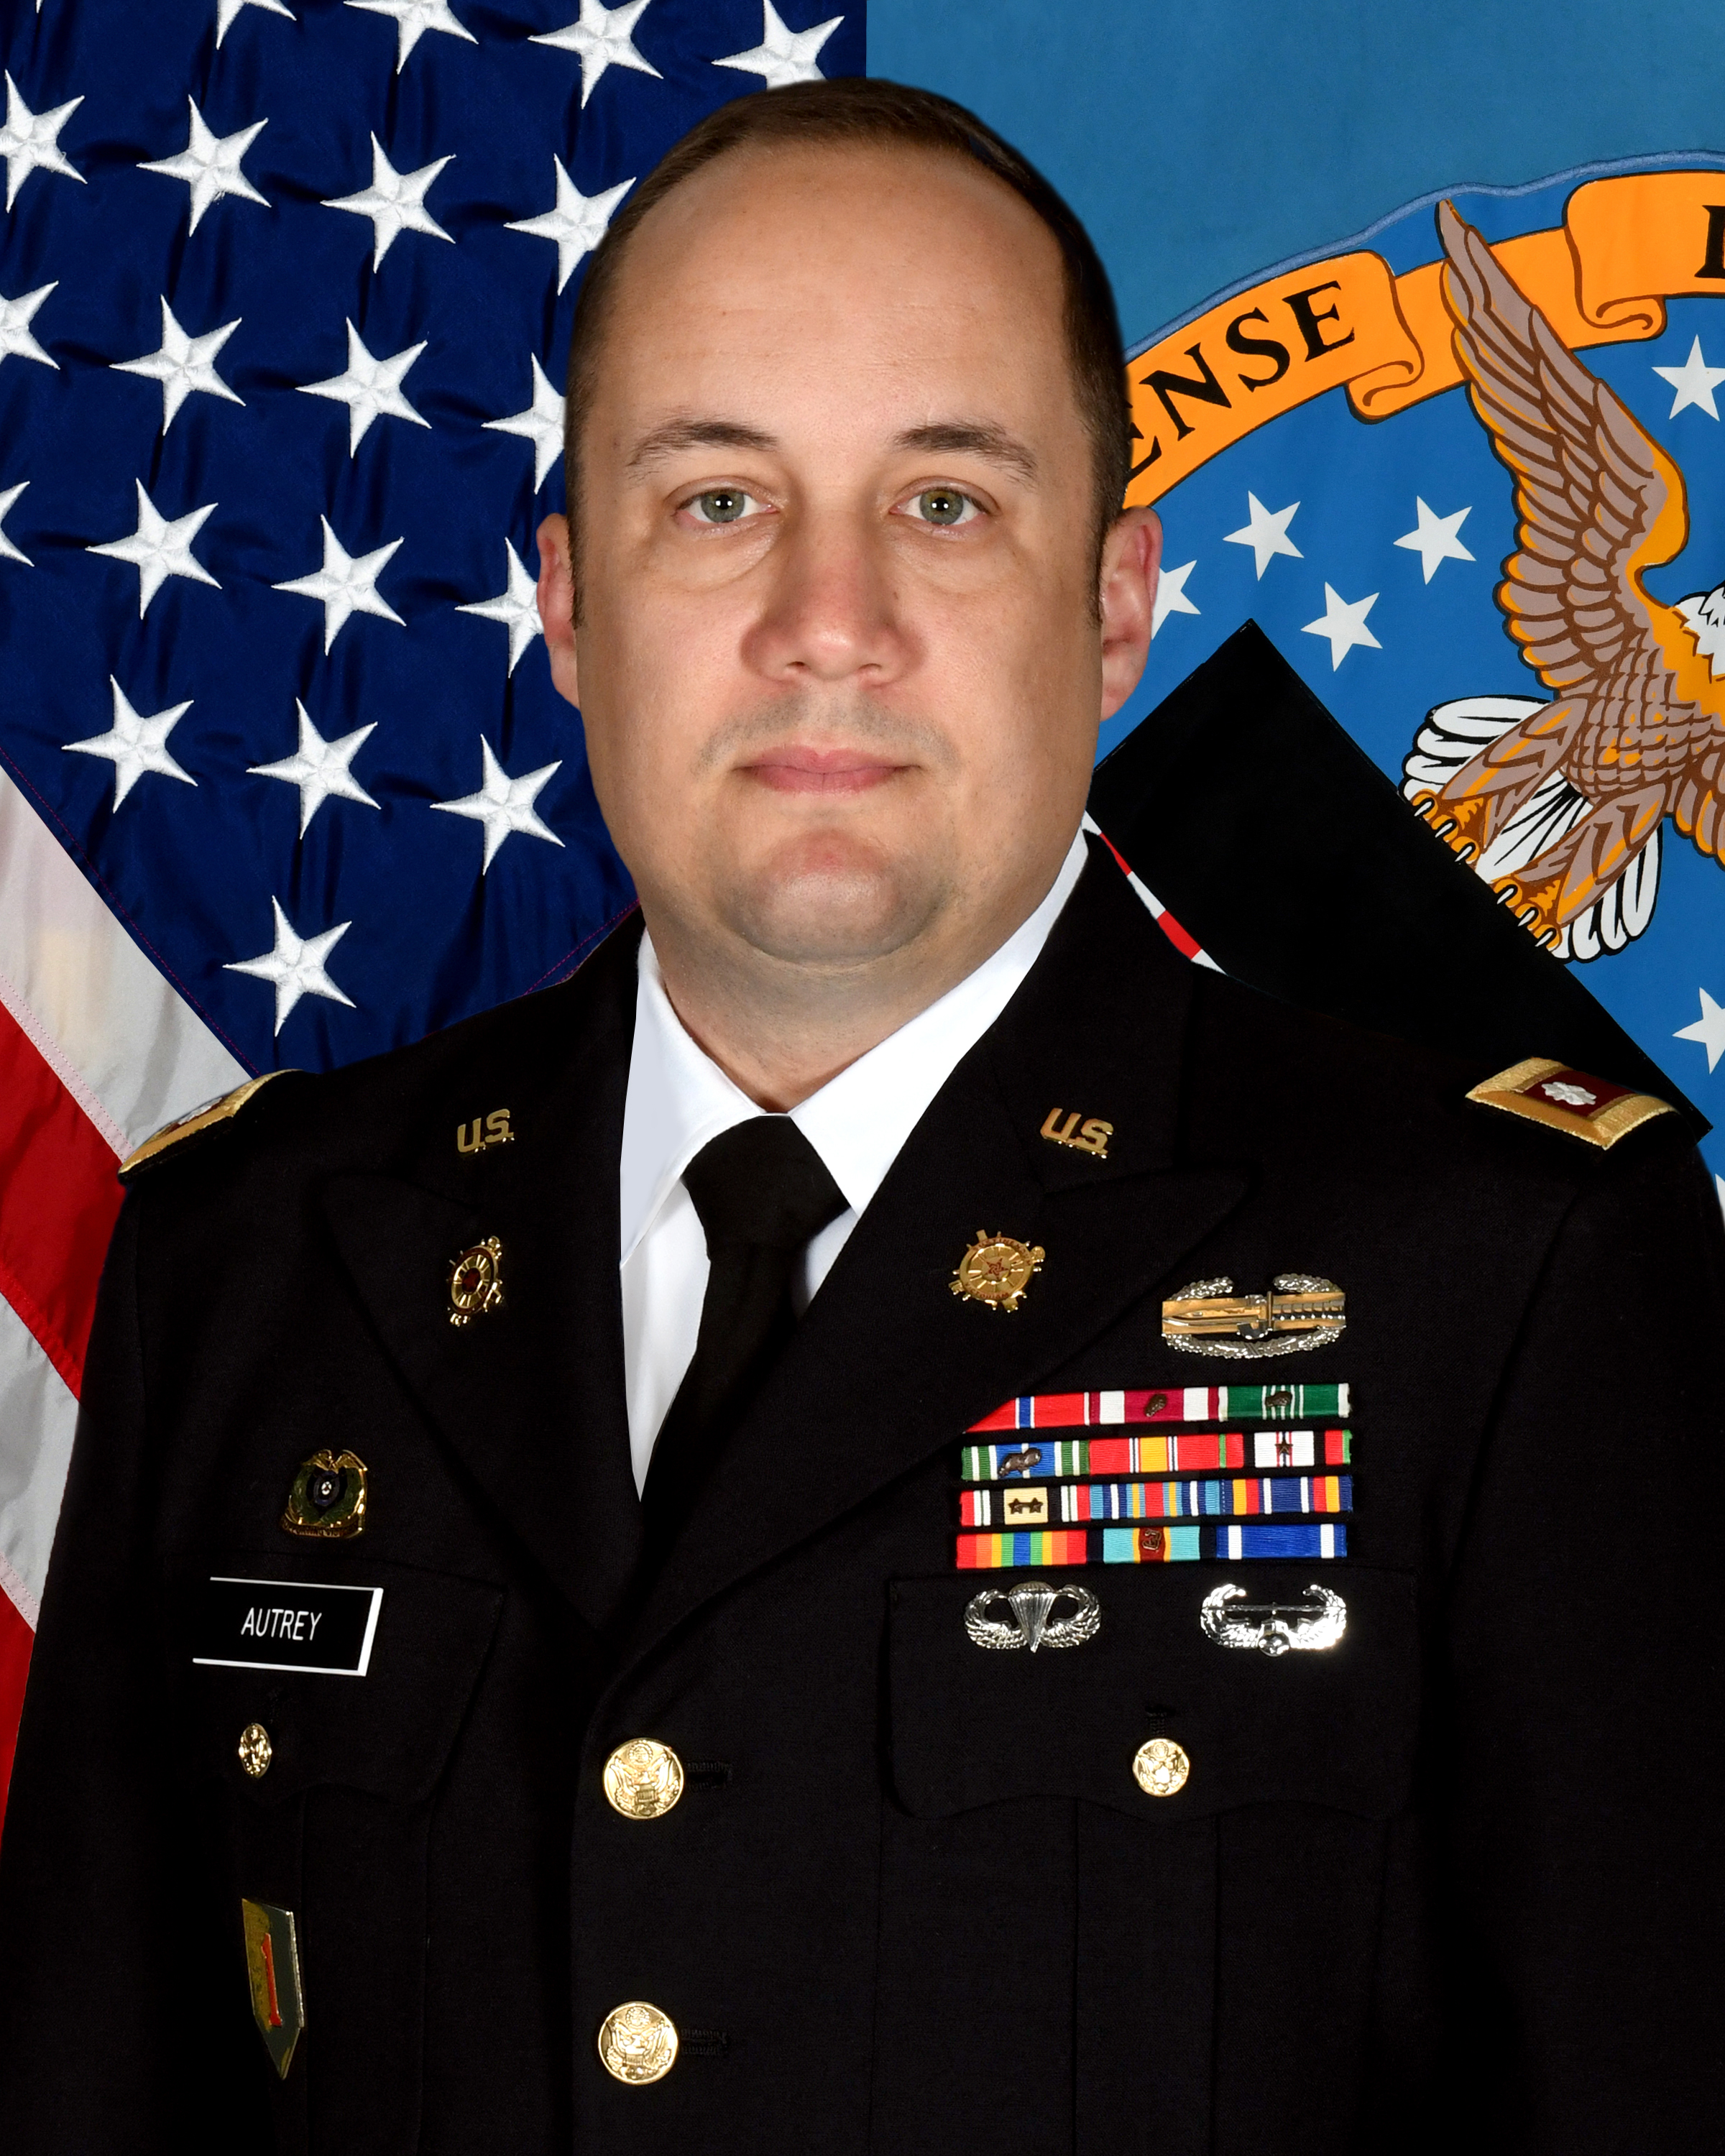 Cody M. Autrey, LTC USA, Commander